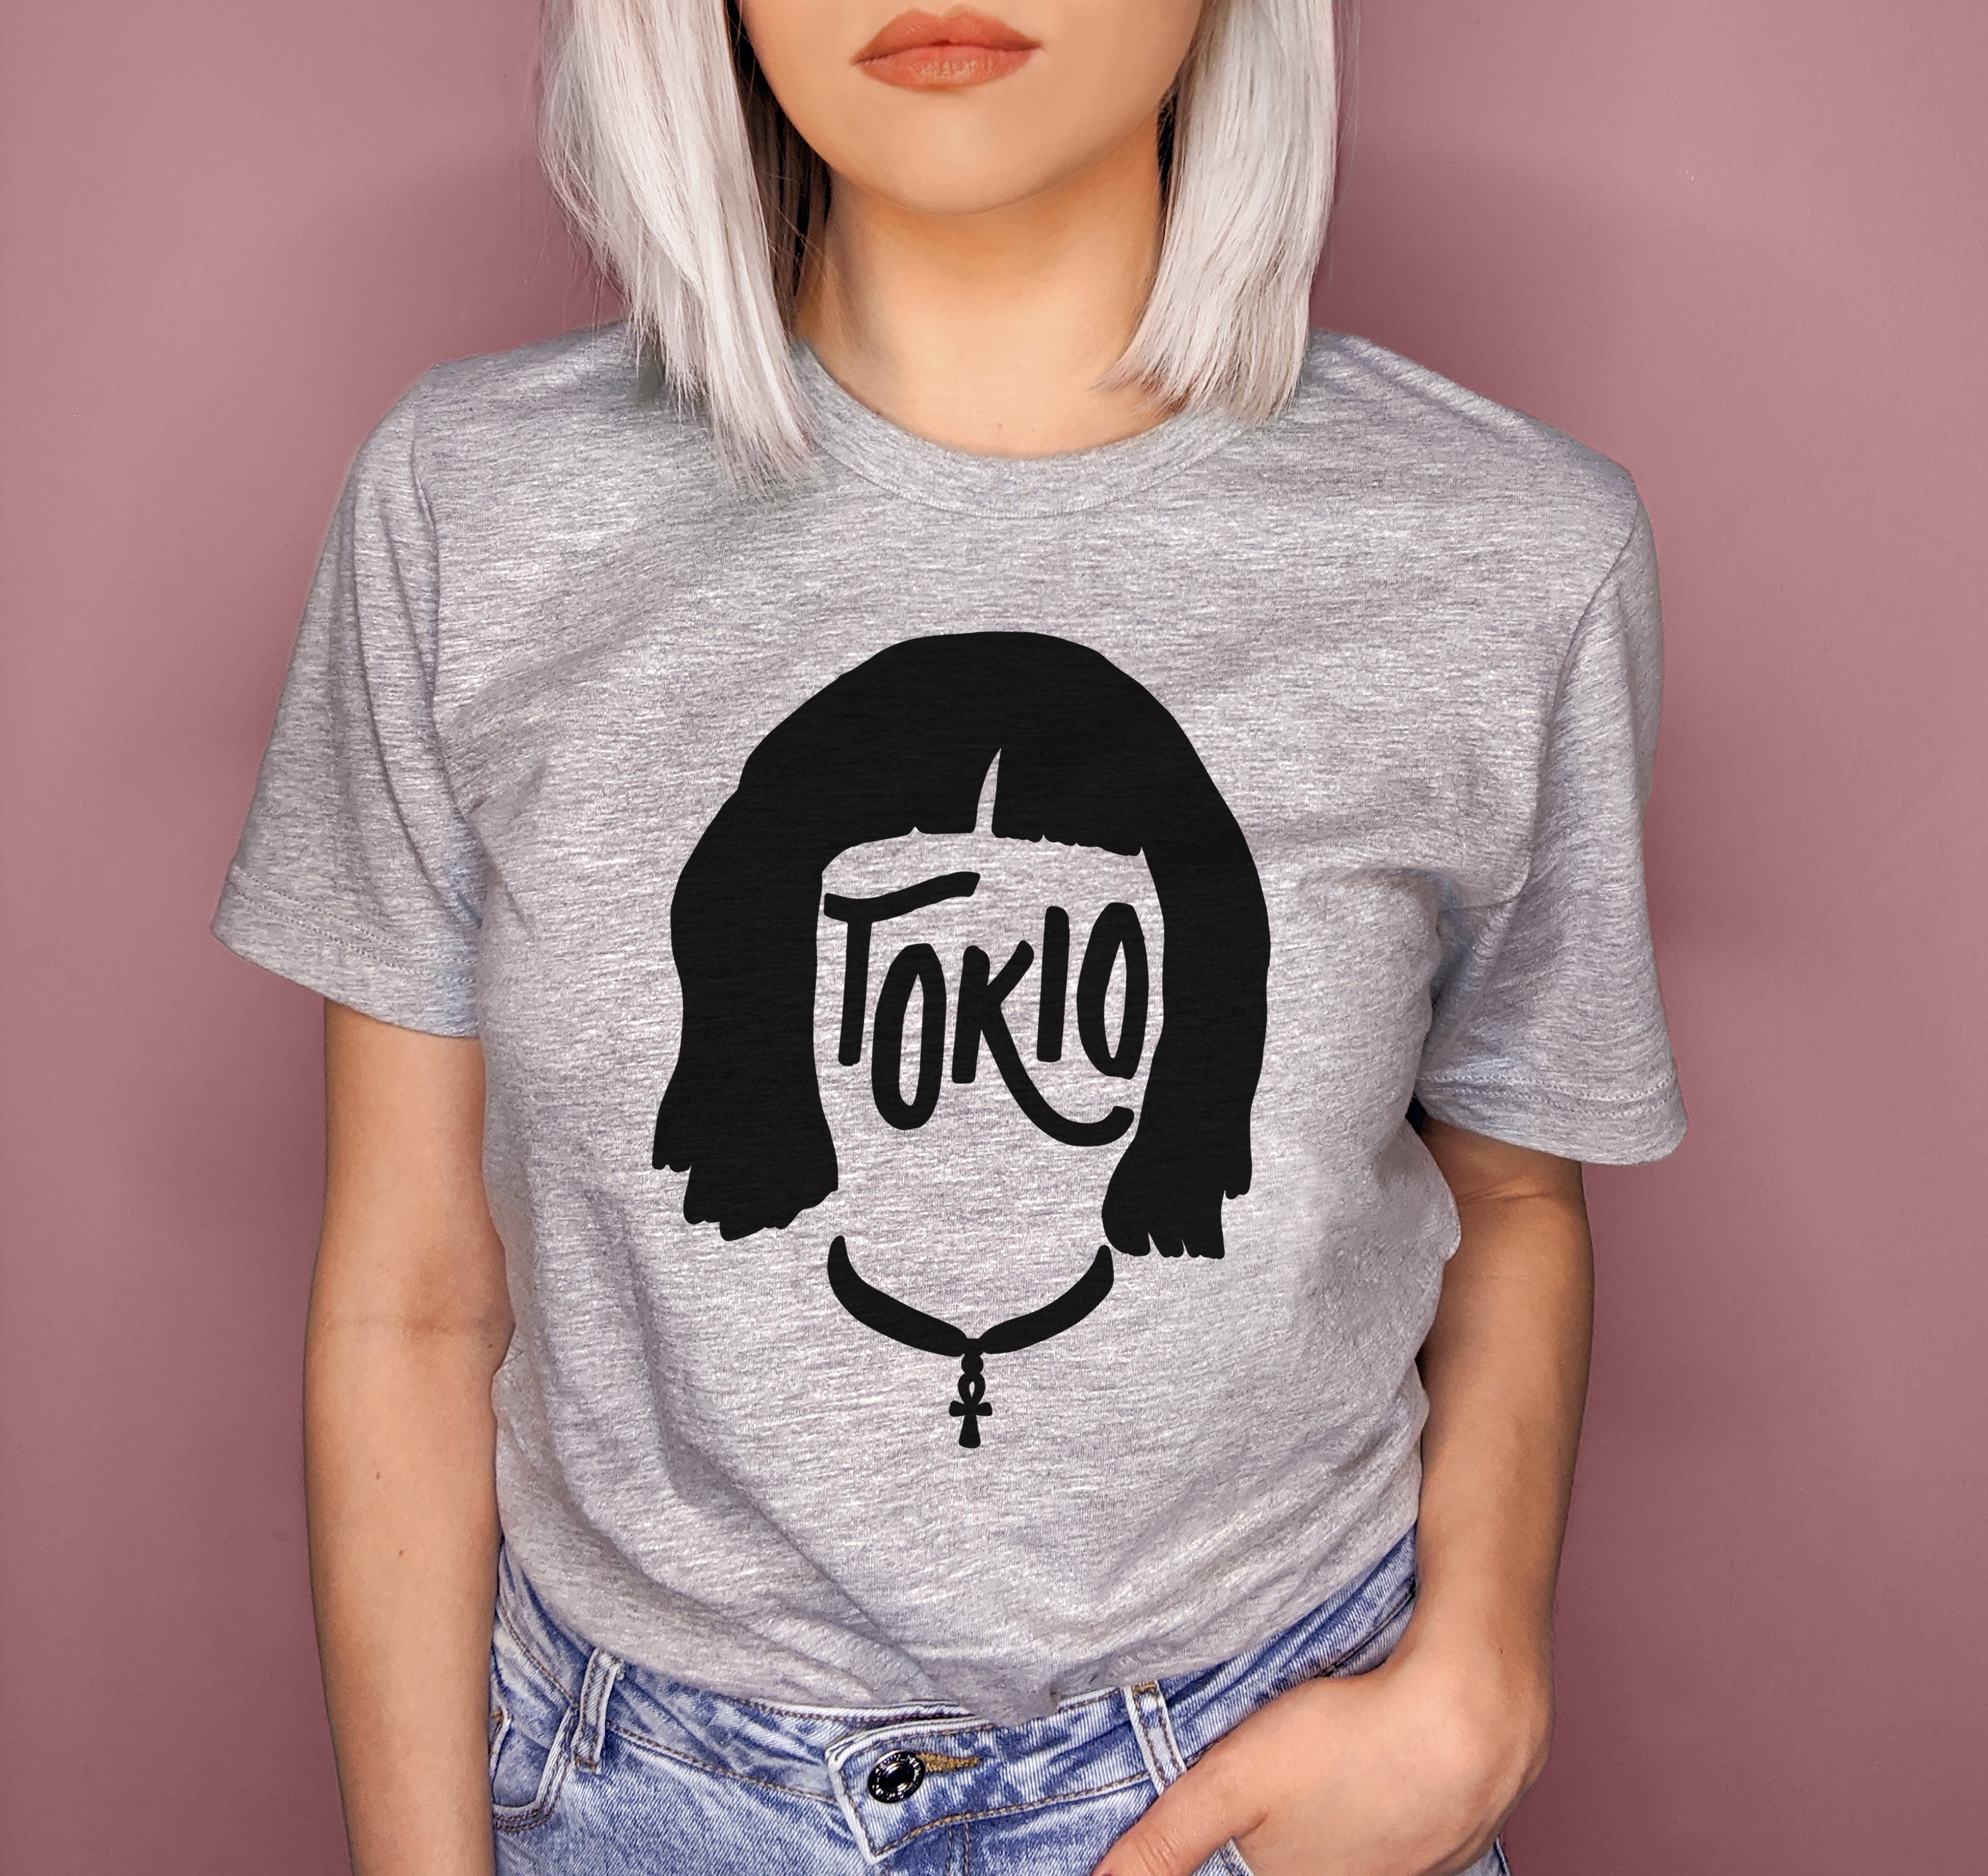 Grey shirt with tokio from la casa de papel - HighCiti